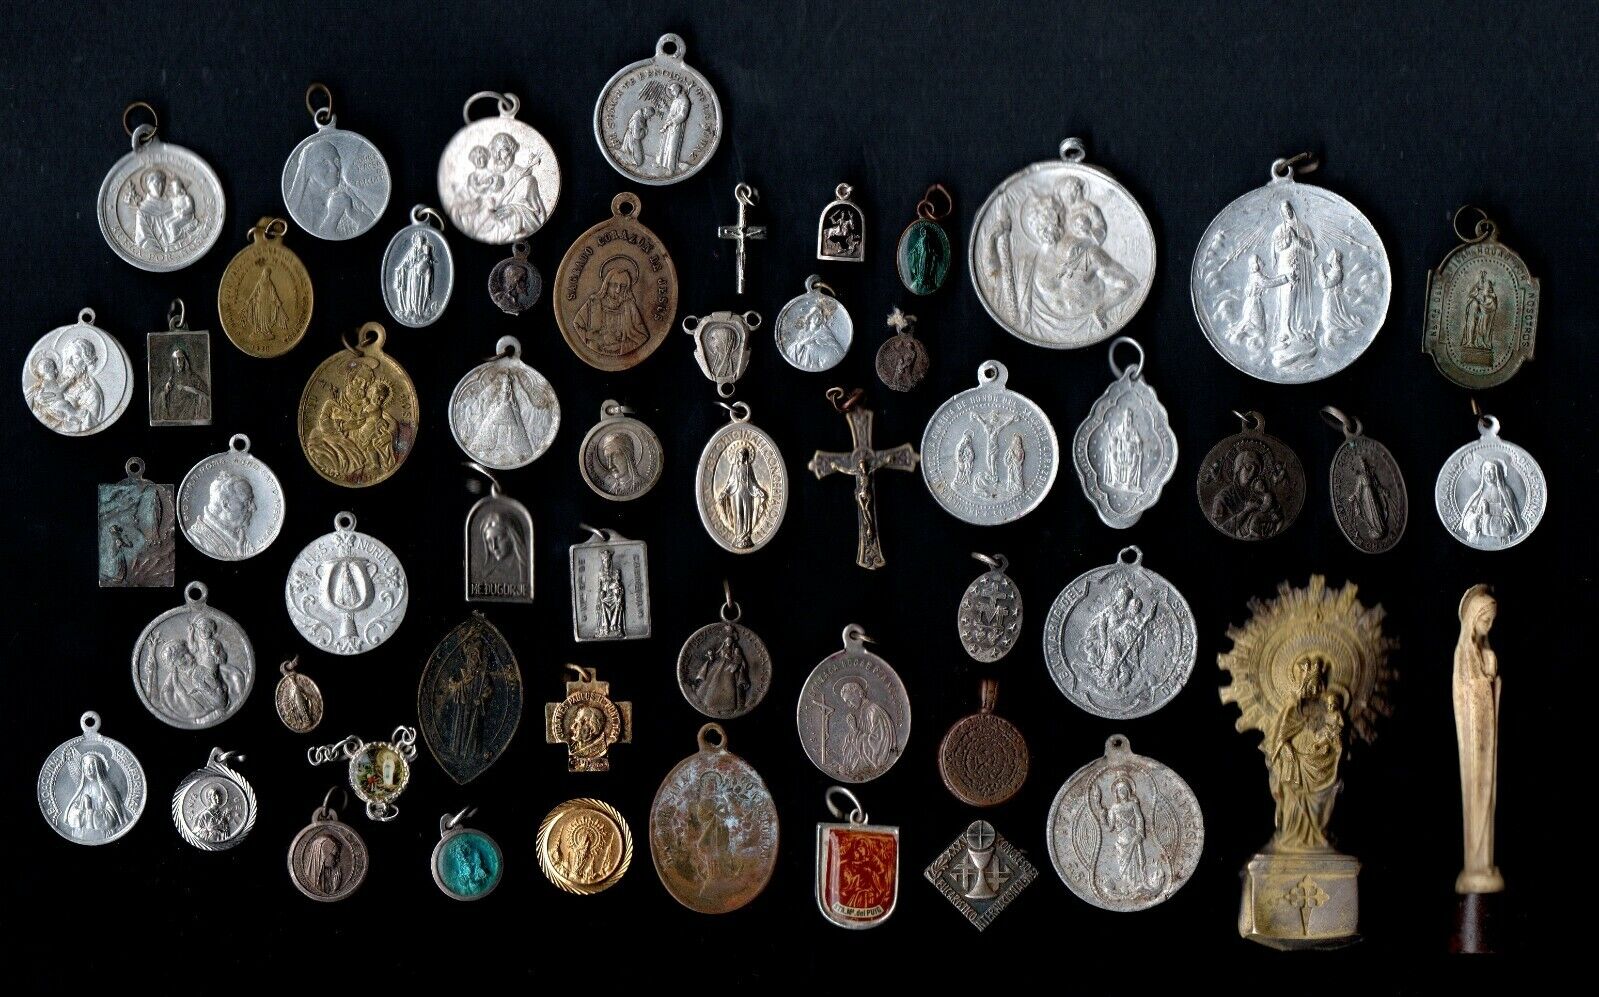 Lote de Medals religiosas utenti medallas antiguas